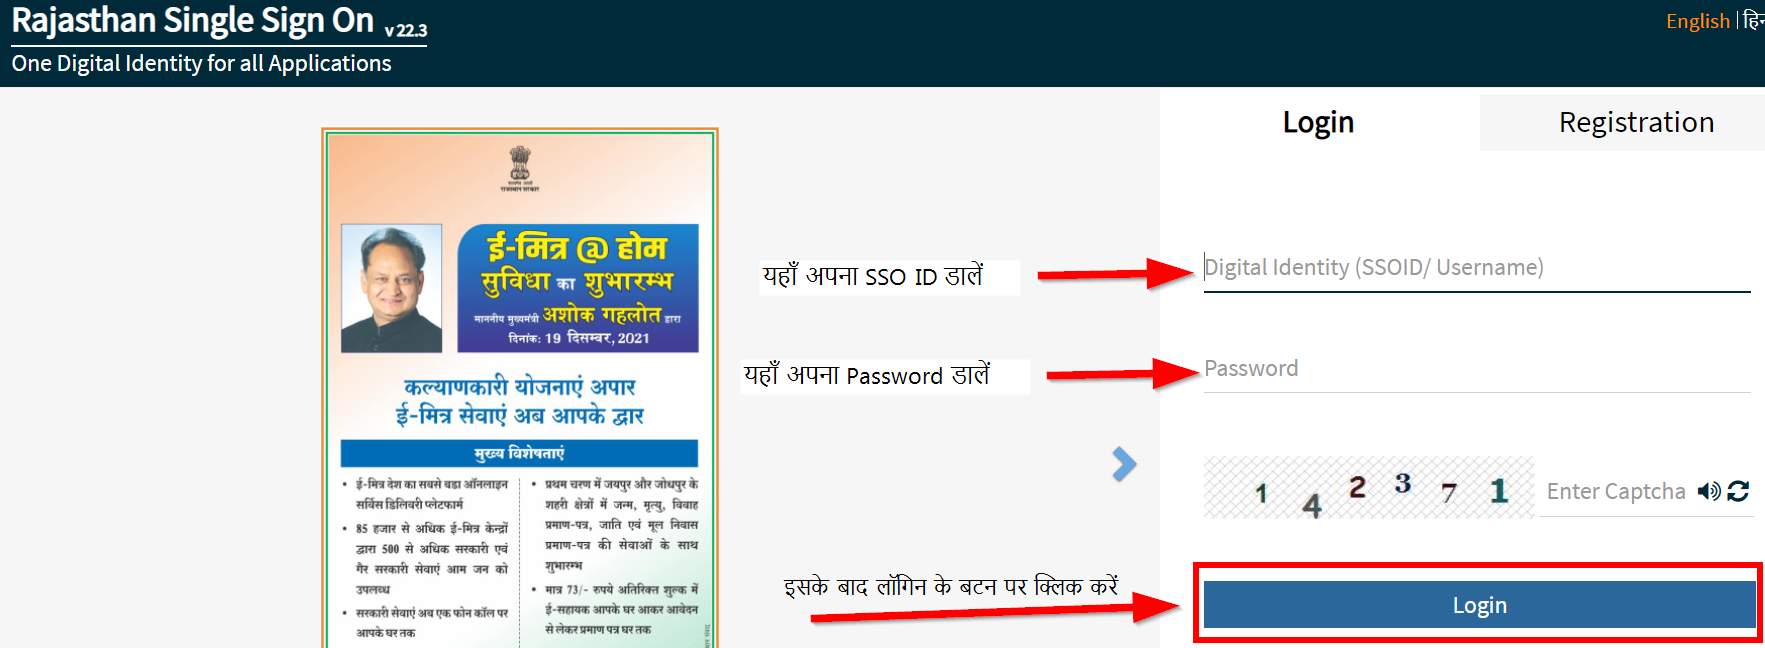 Rajasthan Single Sign On login process